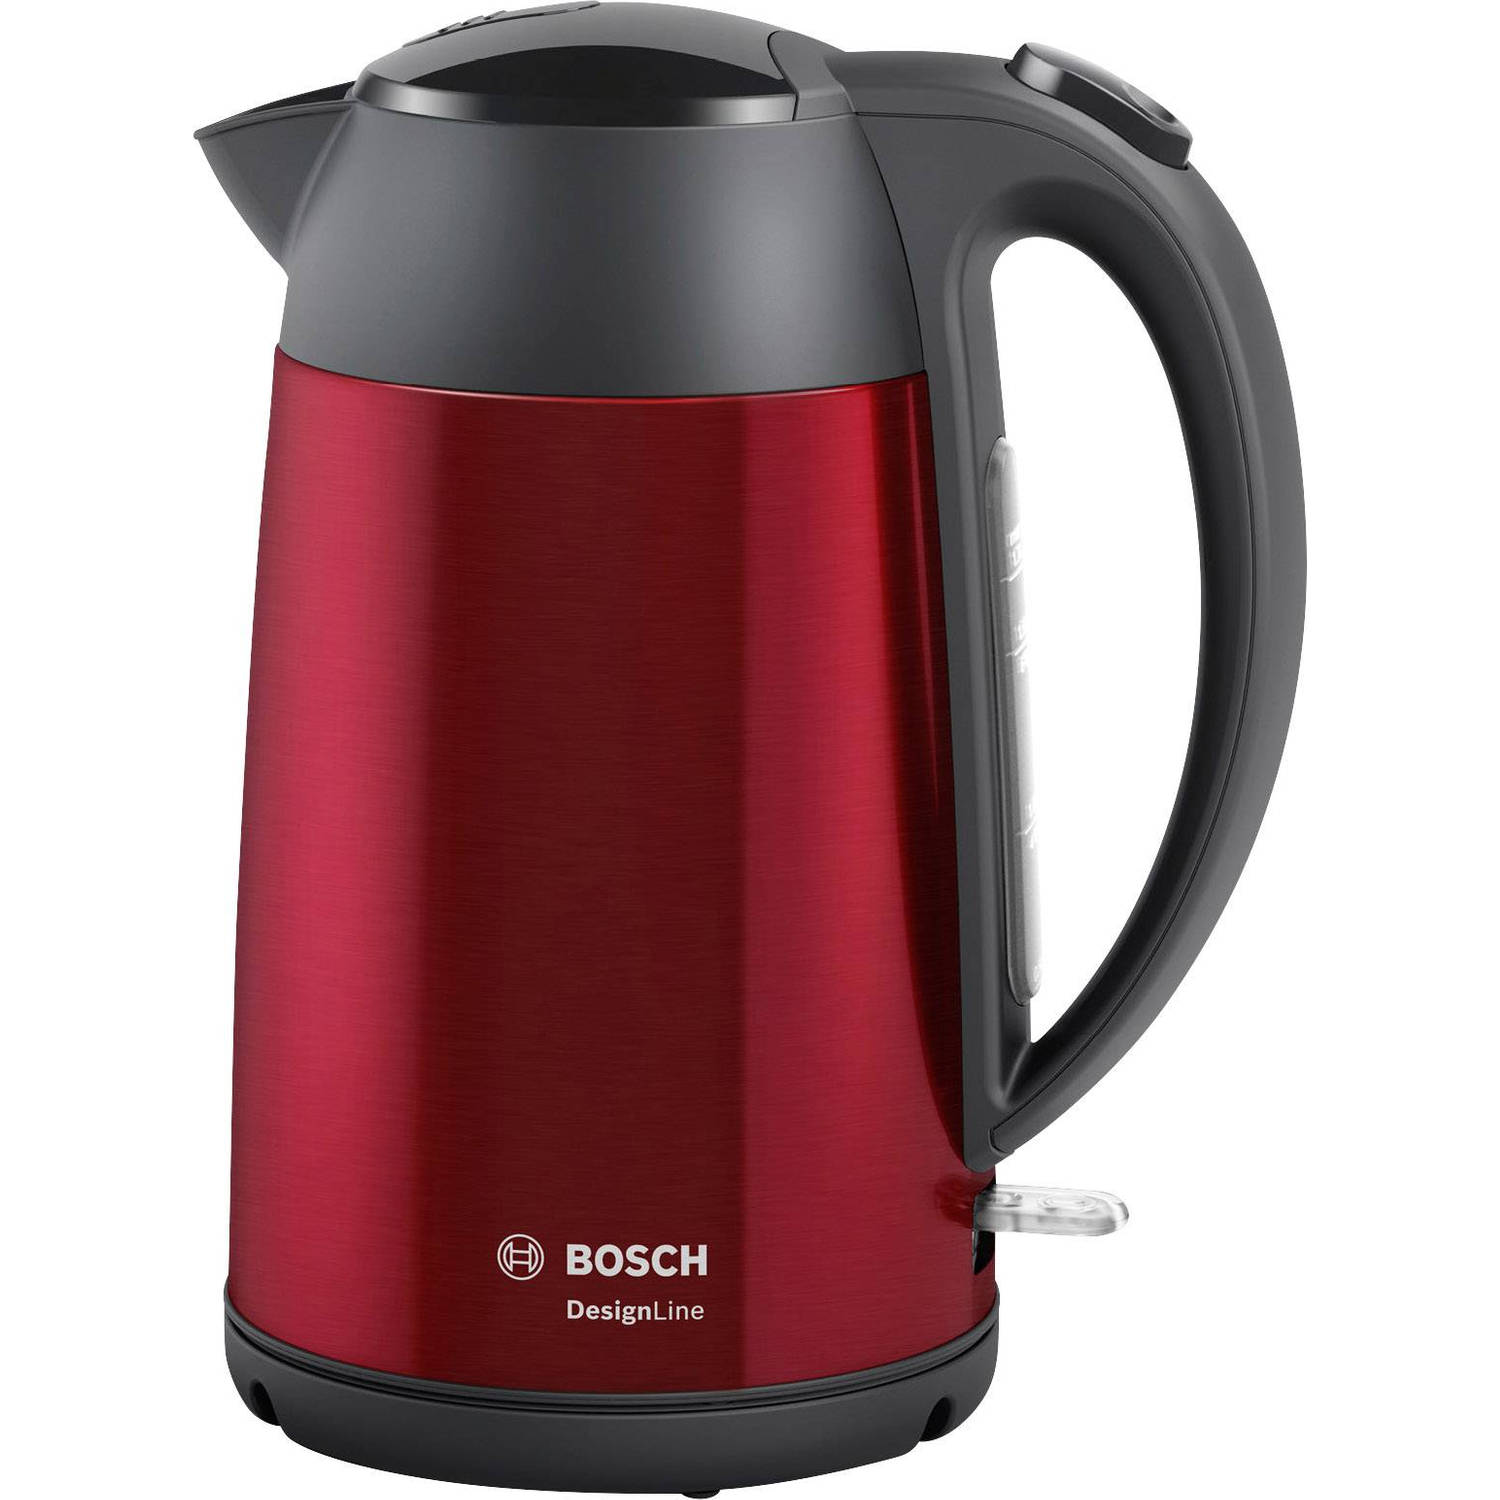 Bosch waterkoker TWK3P424 rood-zwart